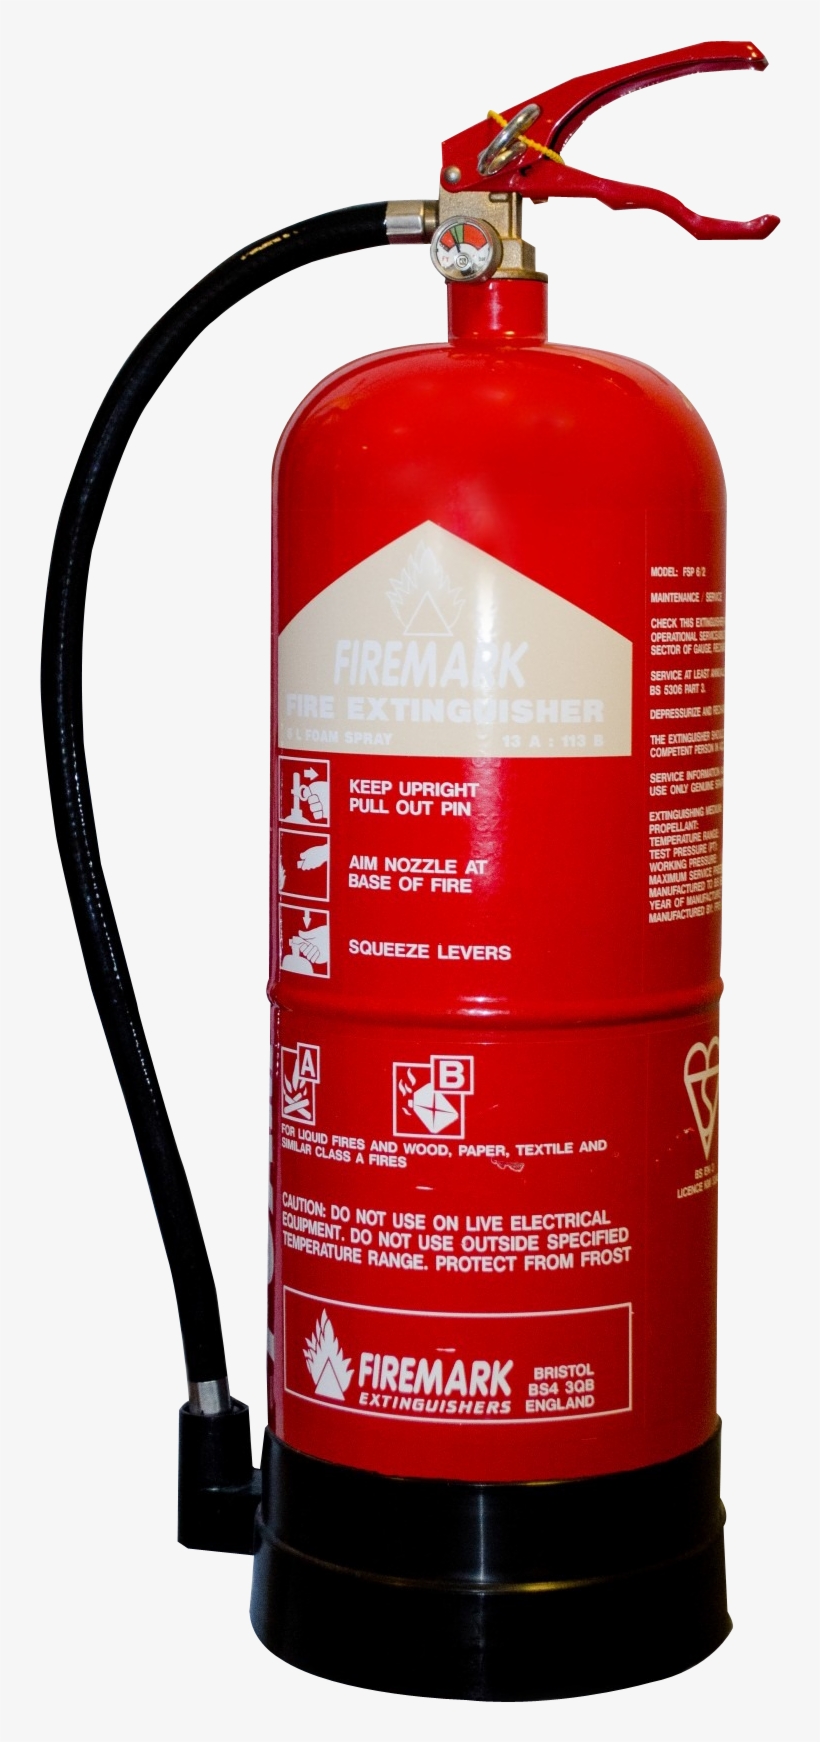 Extinguisher Png - Fire Extinguisher Image Png, transparent png #742985